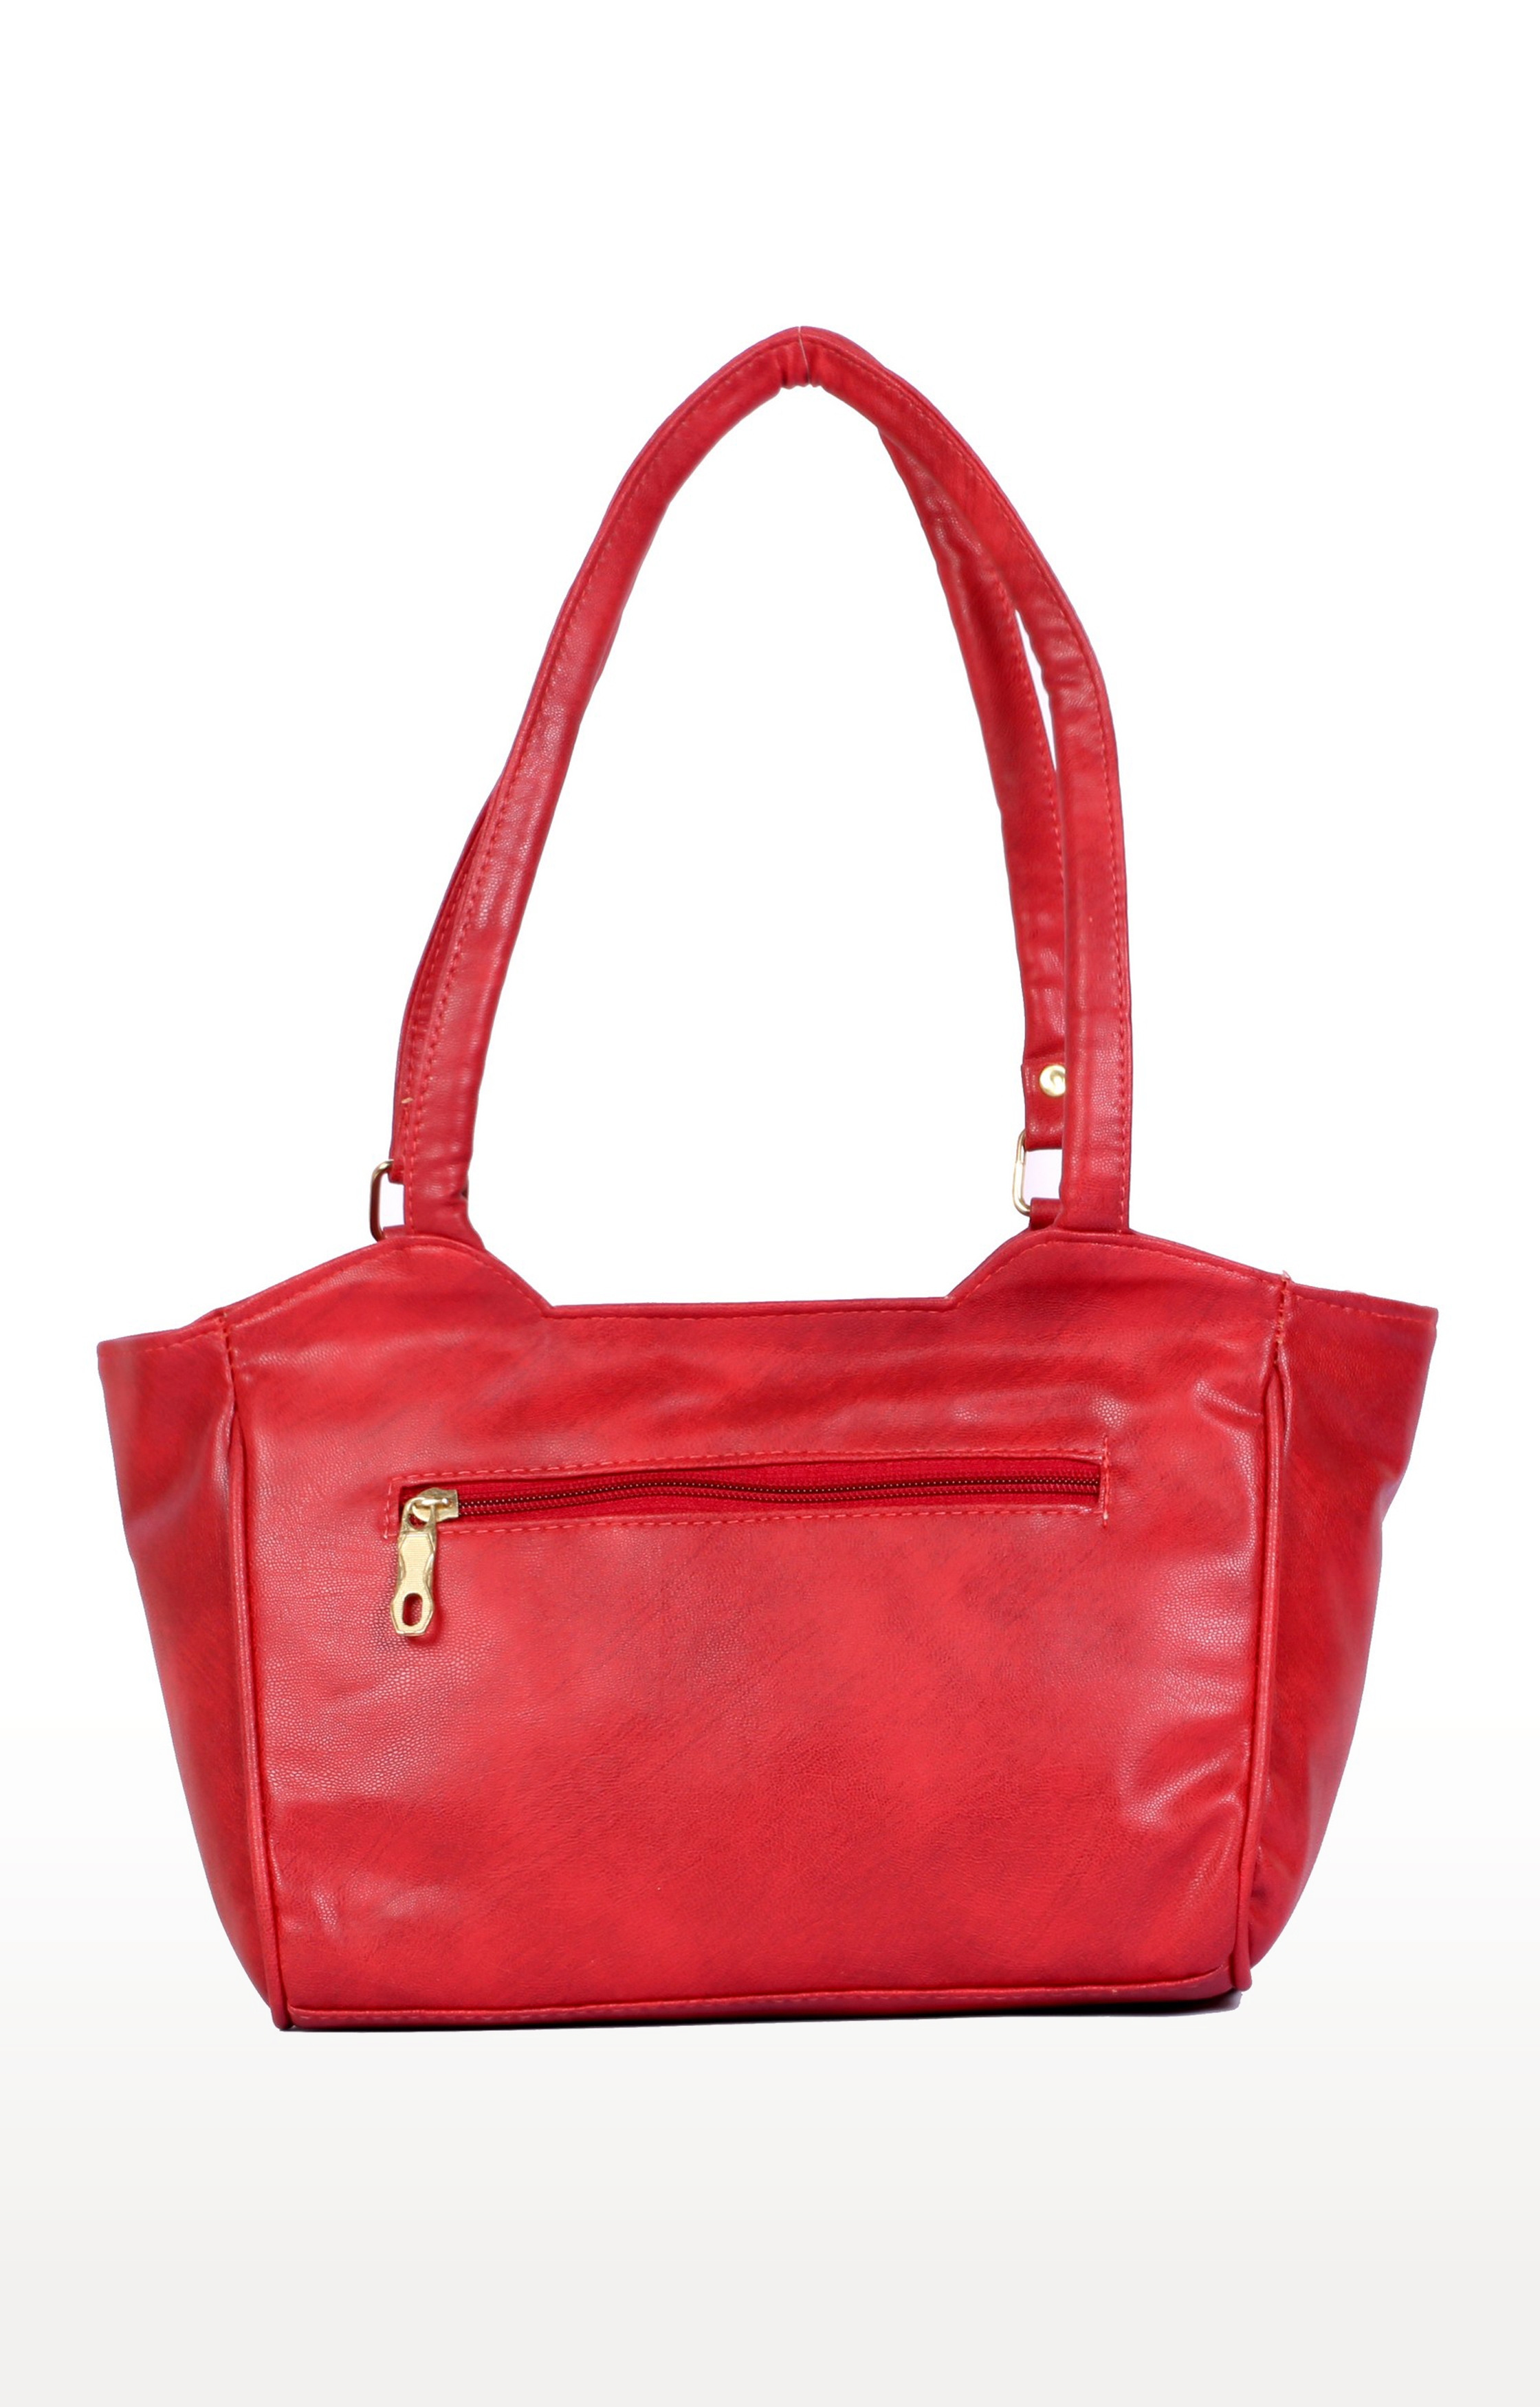 EMM | Lely's Beautiful Women's Handbag With Latest Shades -Pink 1